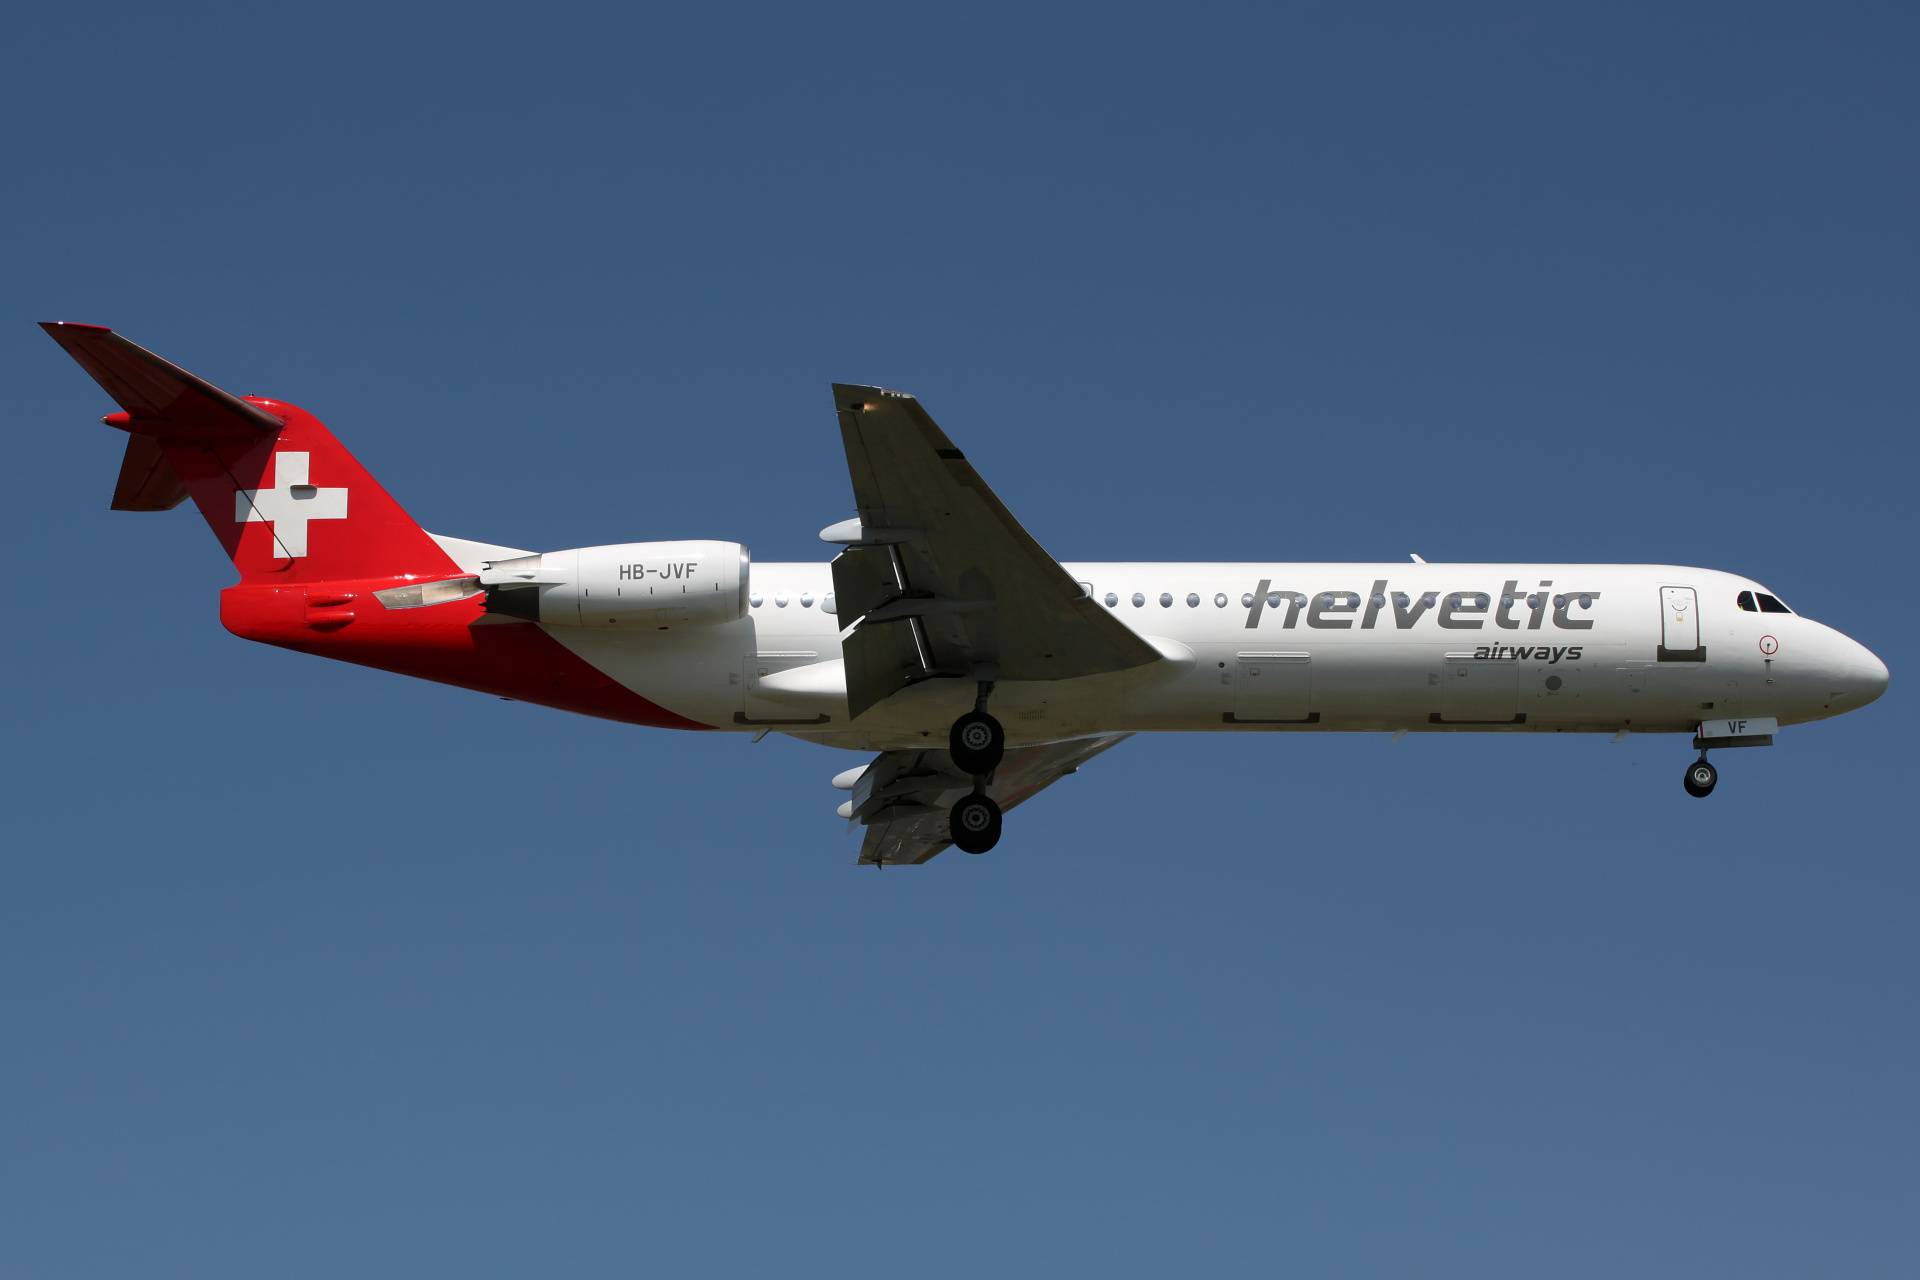 HB-JVF (Aircraft » EPWA Spotting » Fokker 100 » Helvetic Airways)